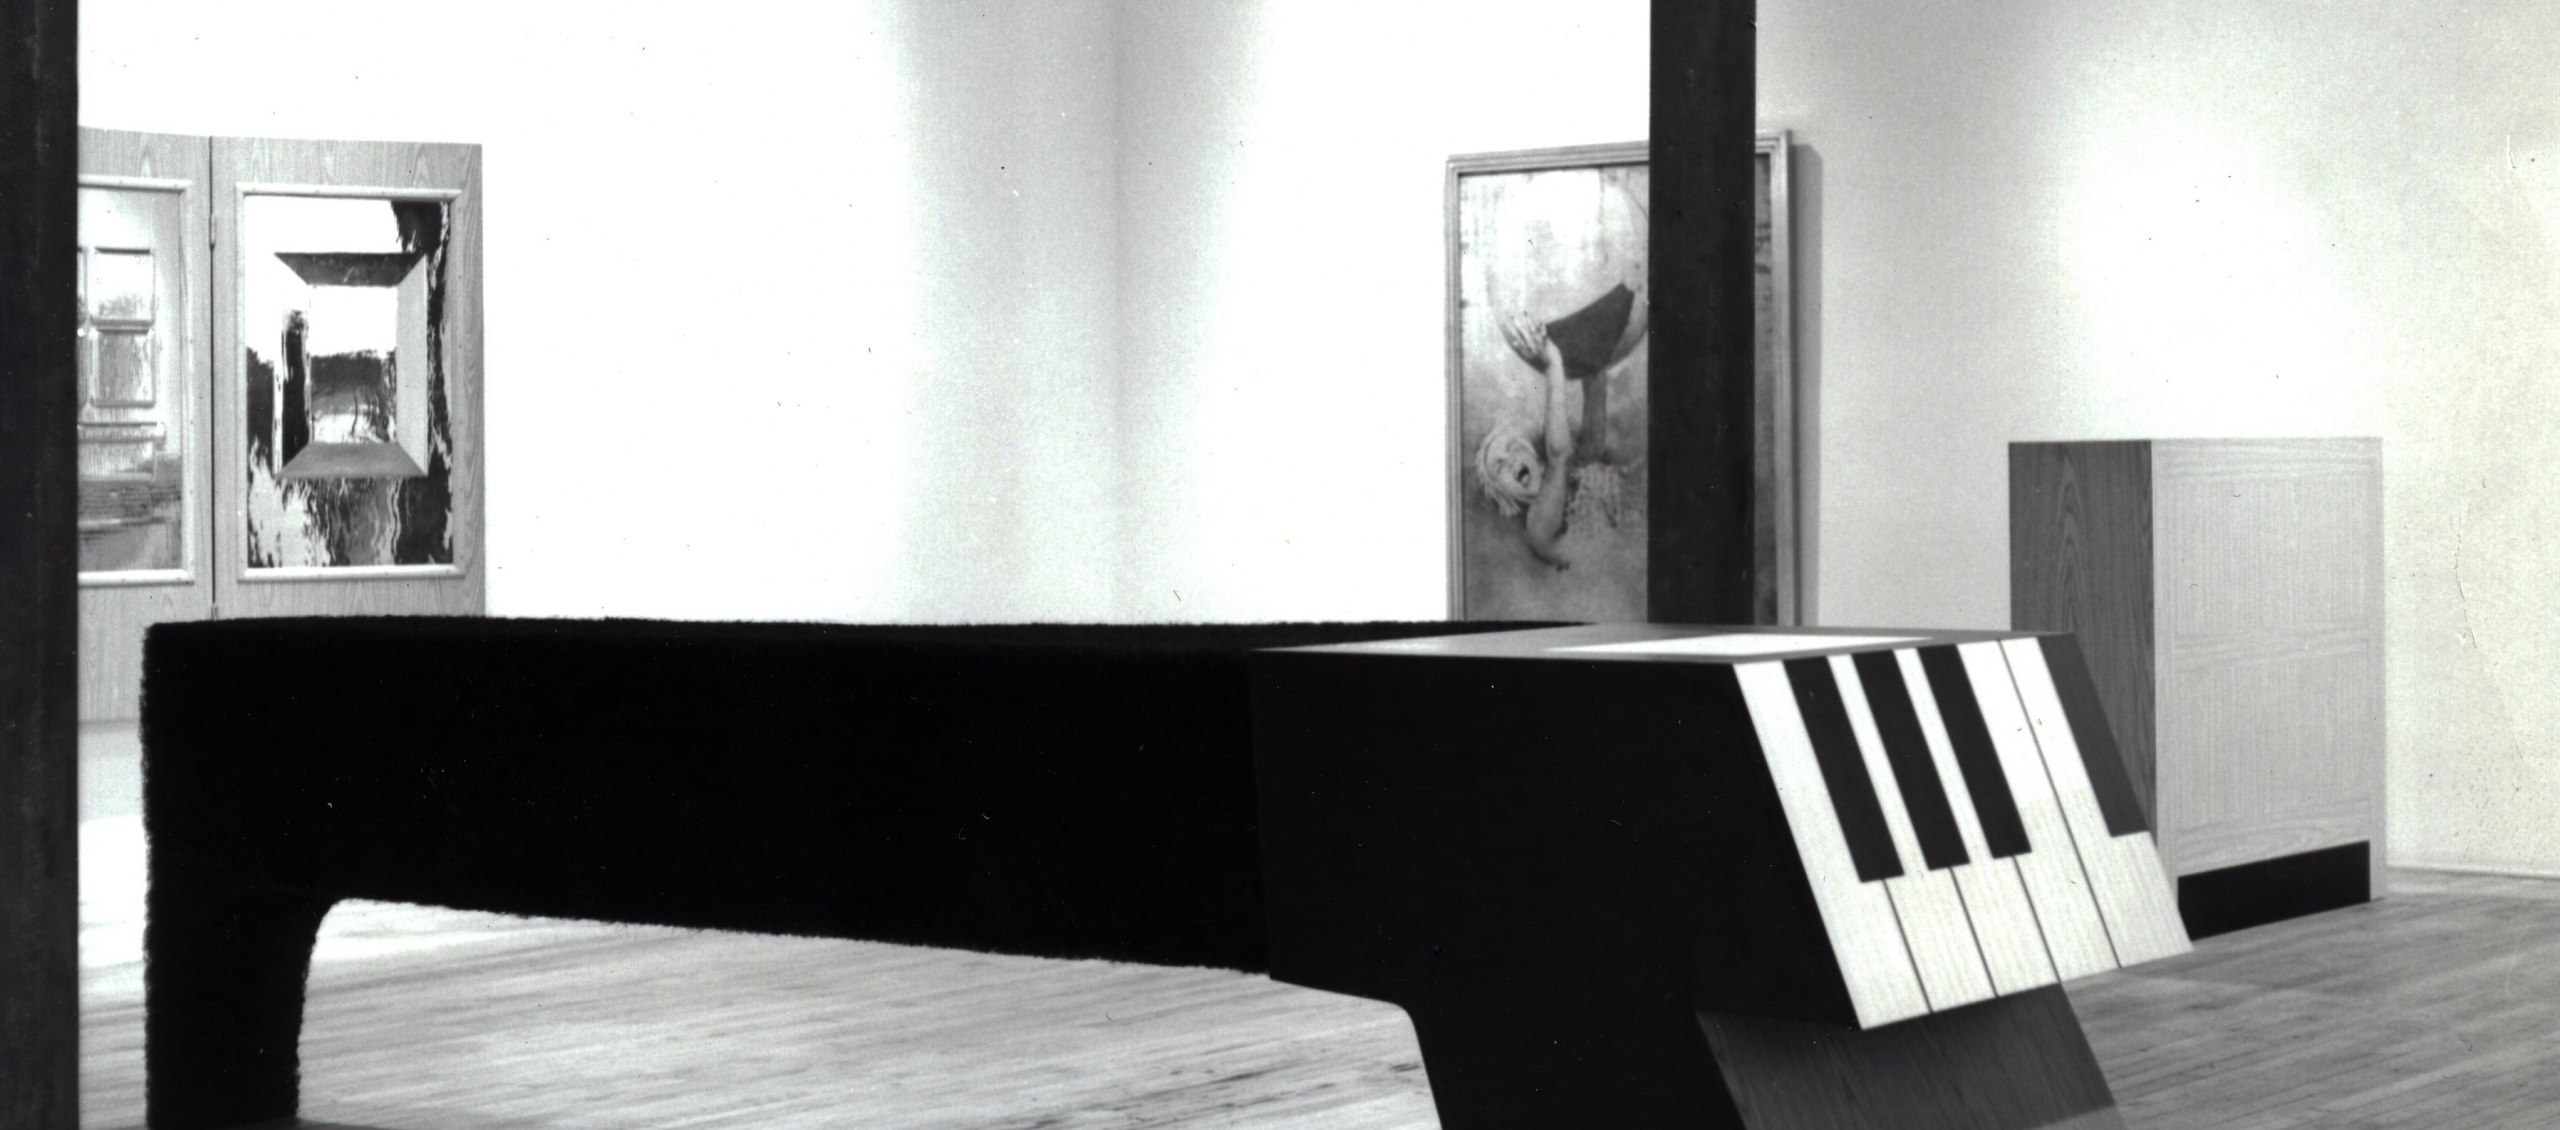 Installation view at Young Hoffman Gallery, Richard Artschwager, Sculpture, 1980